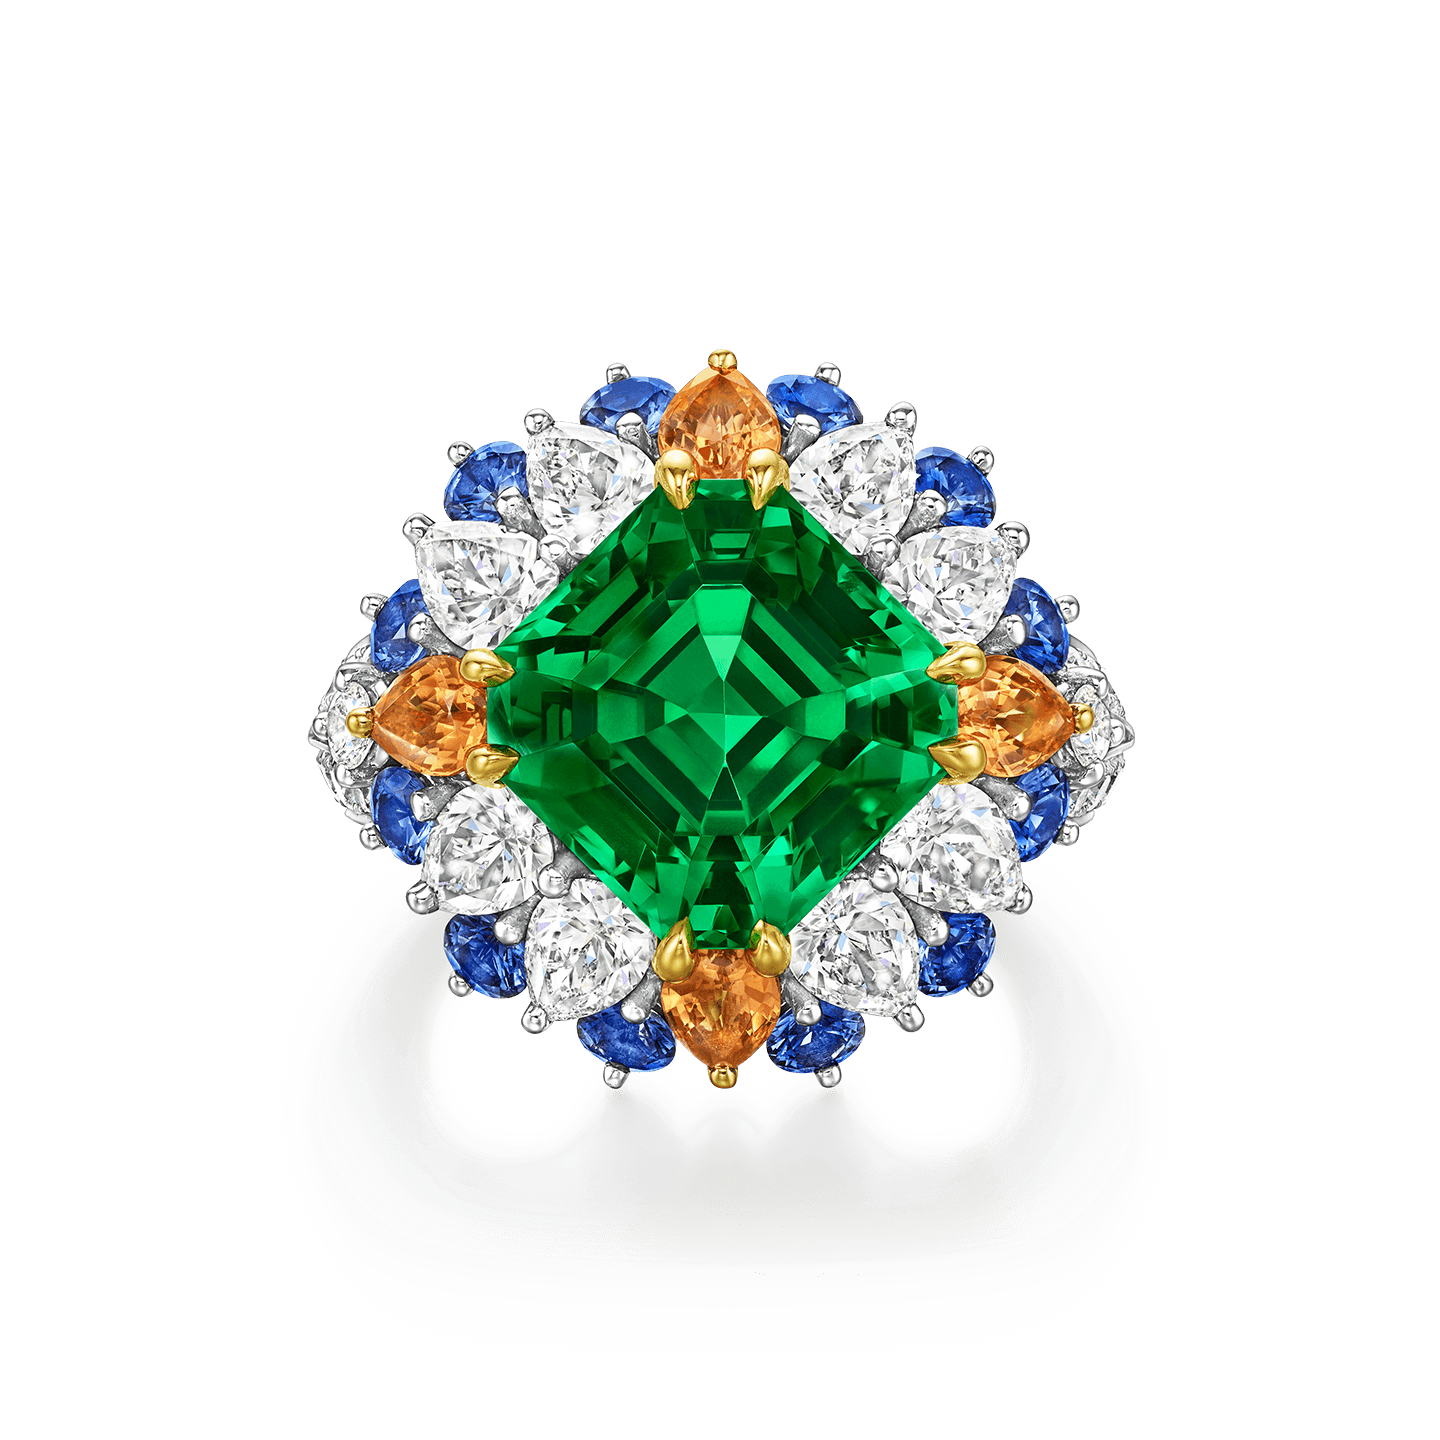 Winston Candy Tsavorite Garnet Ring with Sapphires, Spessartite Garnets and Diamonds